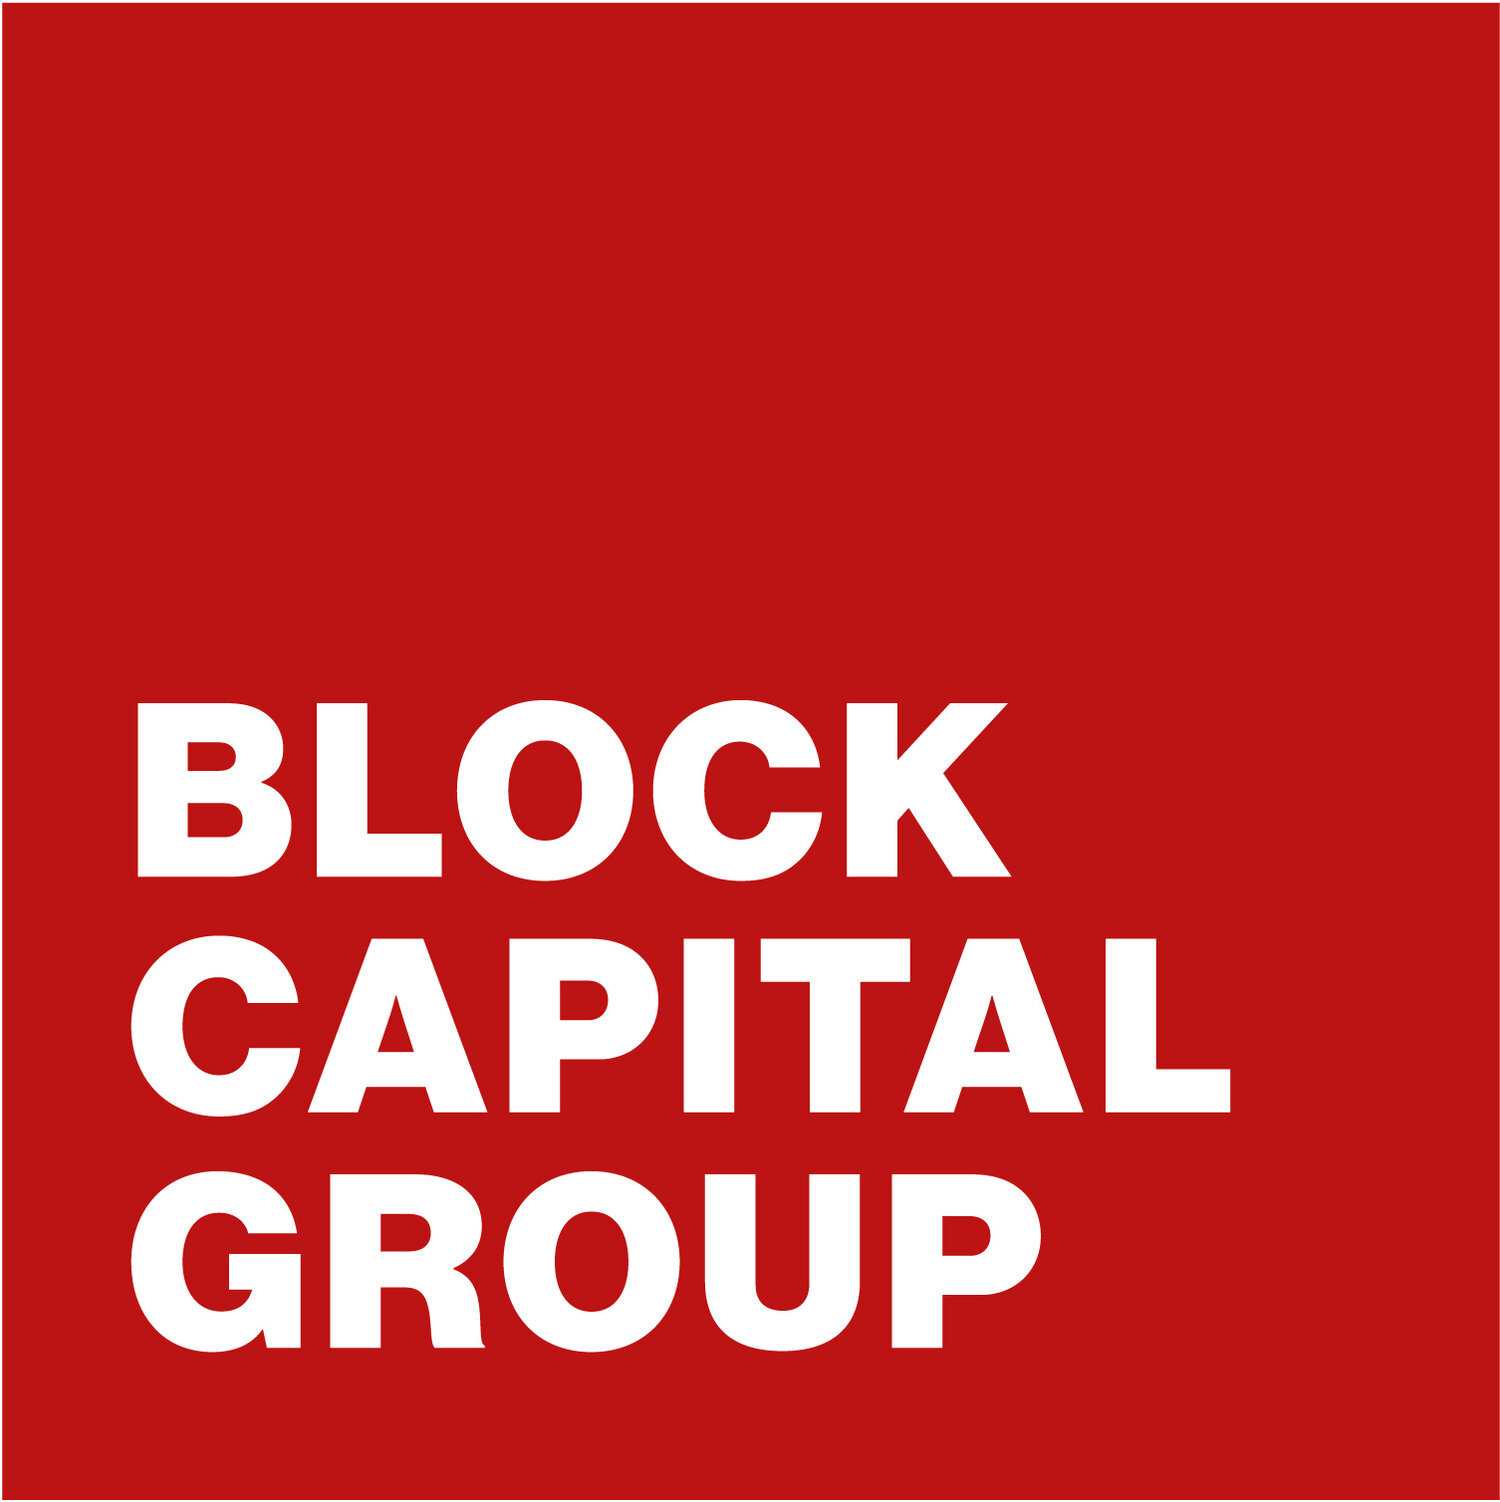 Block_Capital_Group_Red-01.jpg